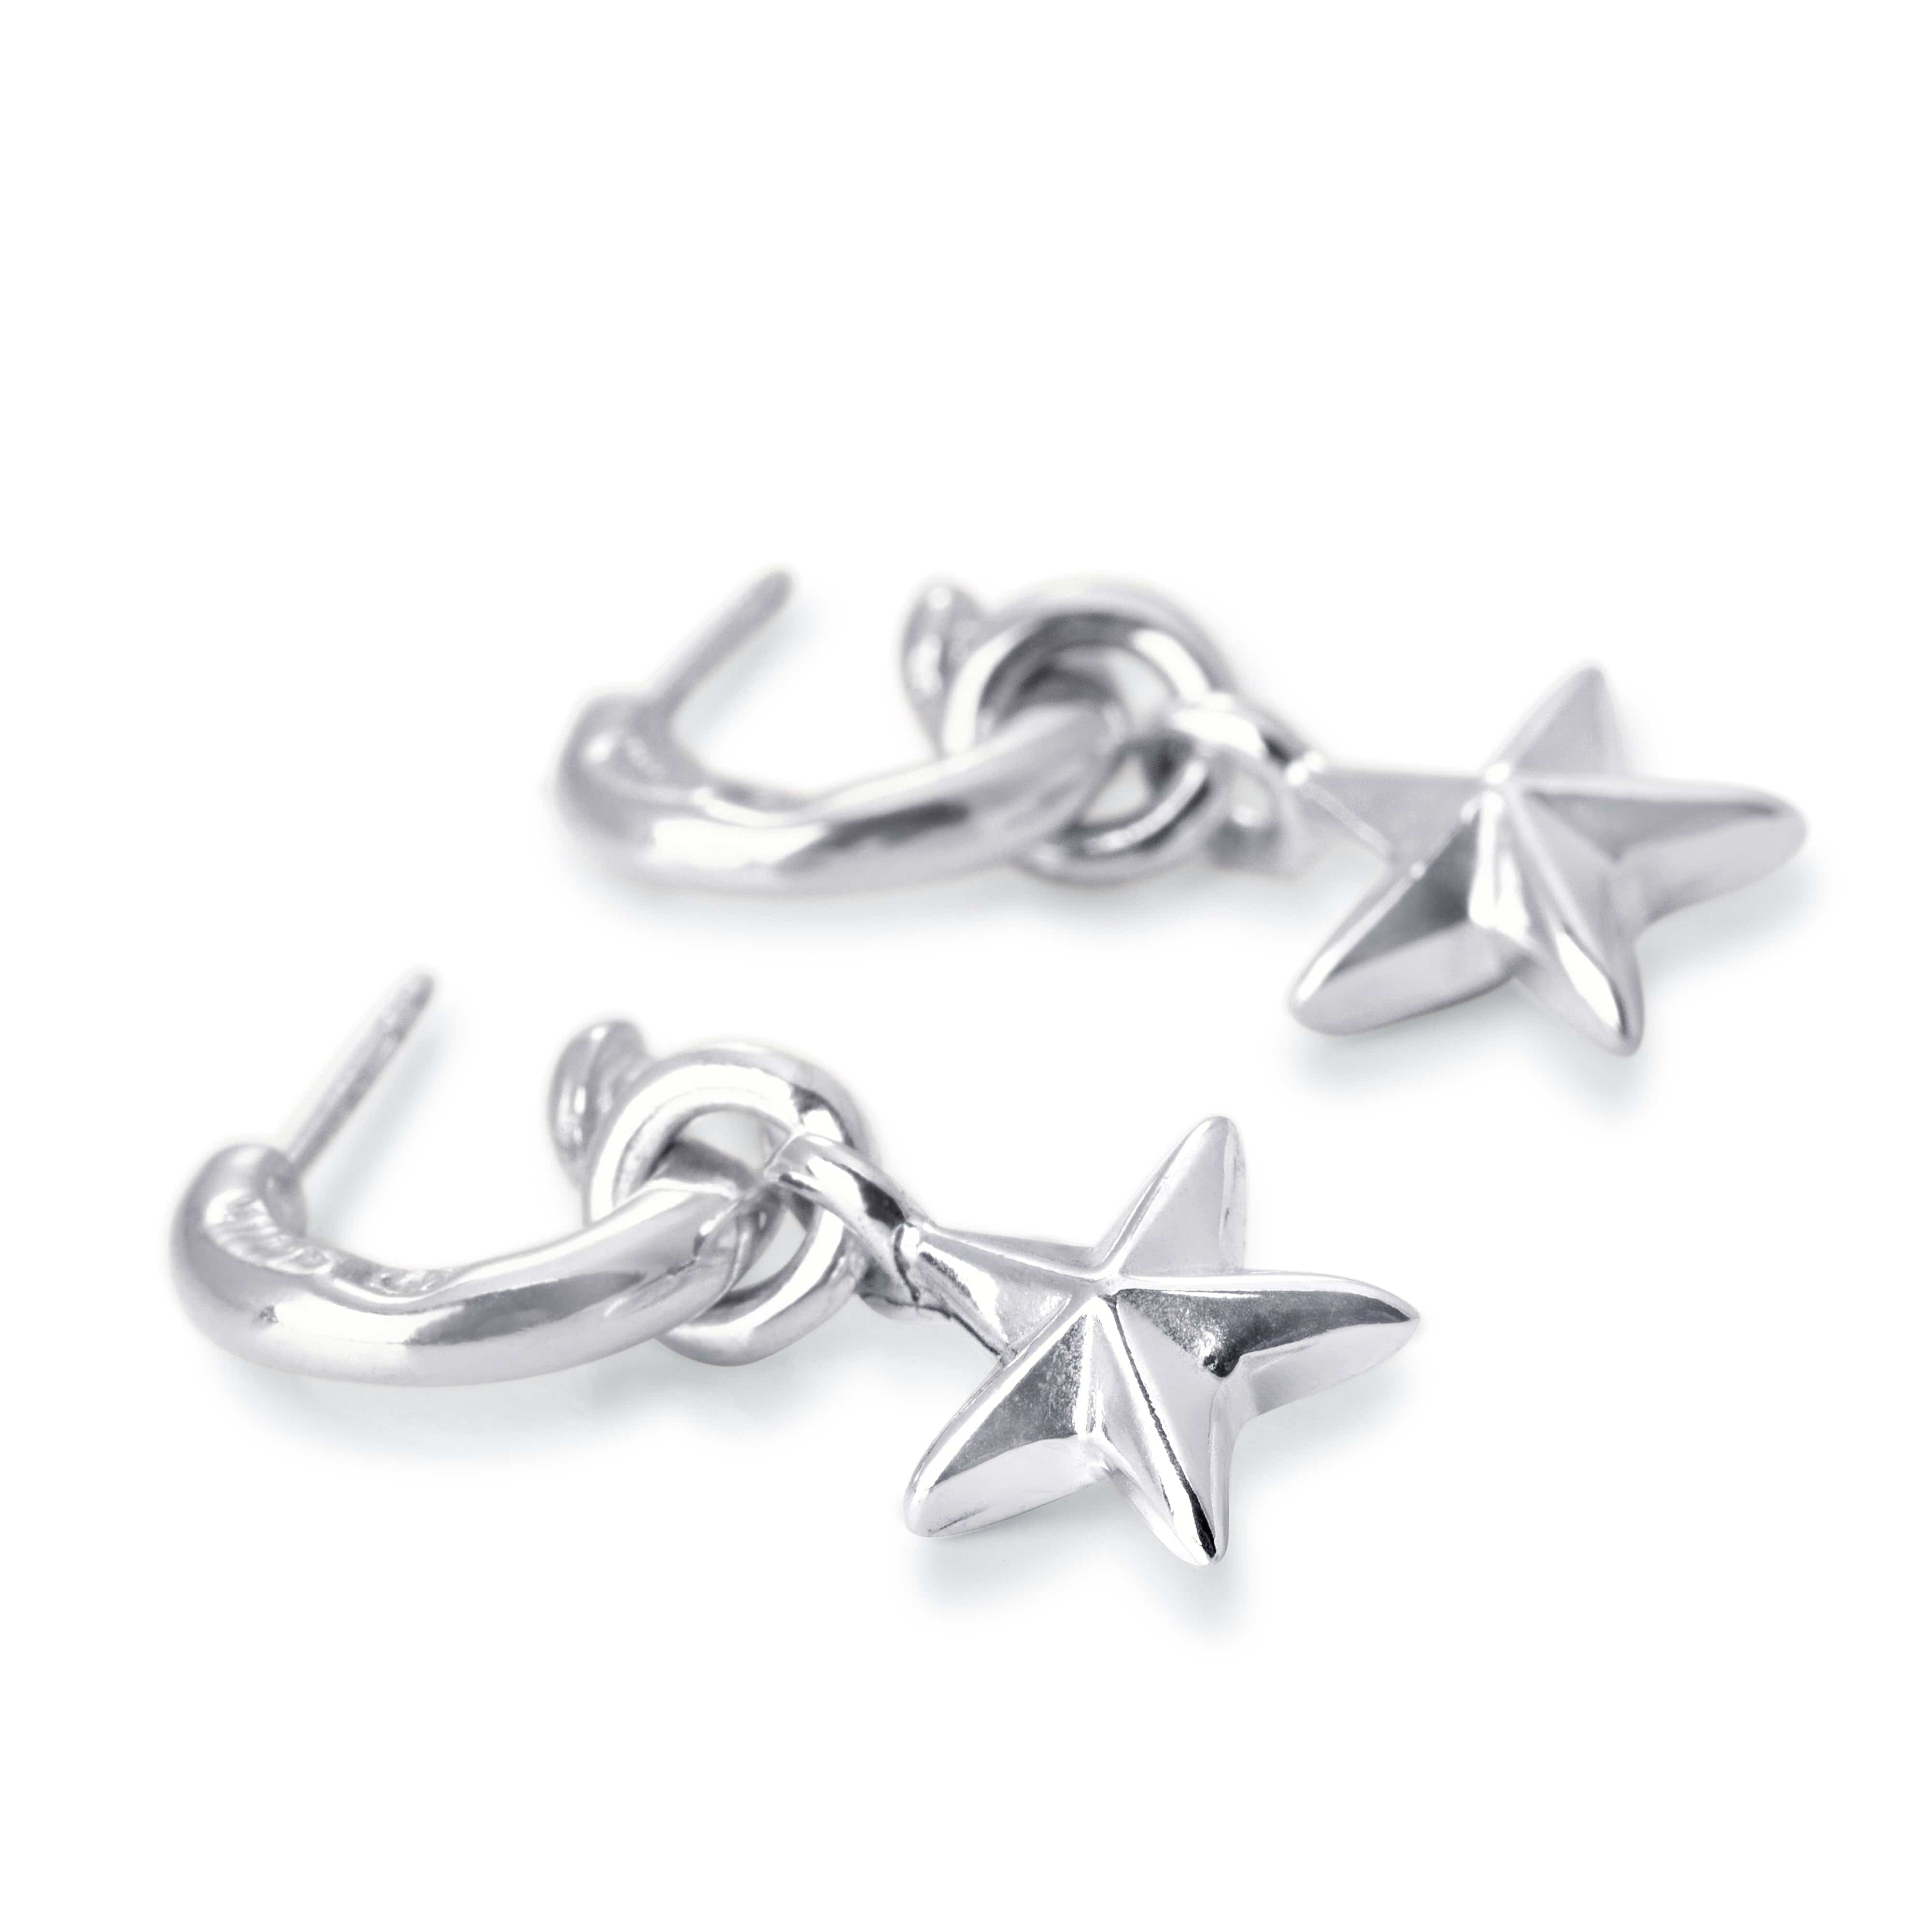 Bloodline Design Womens Earrings Hallmark Hoop Earrings With Star Charms